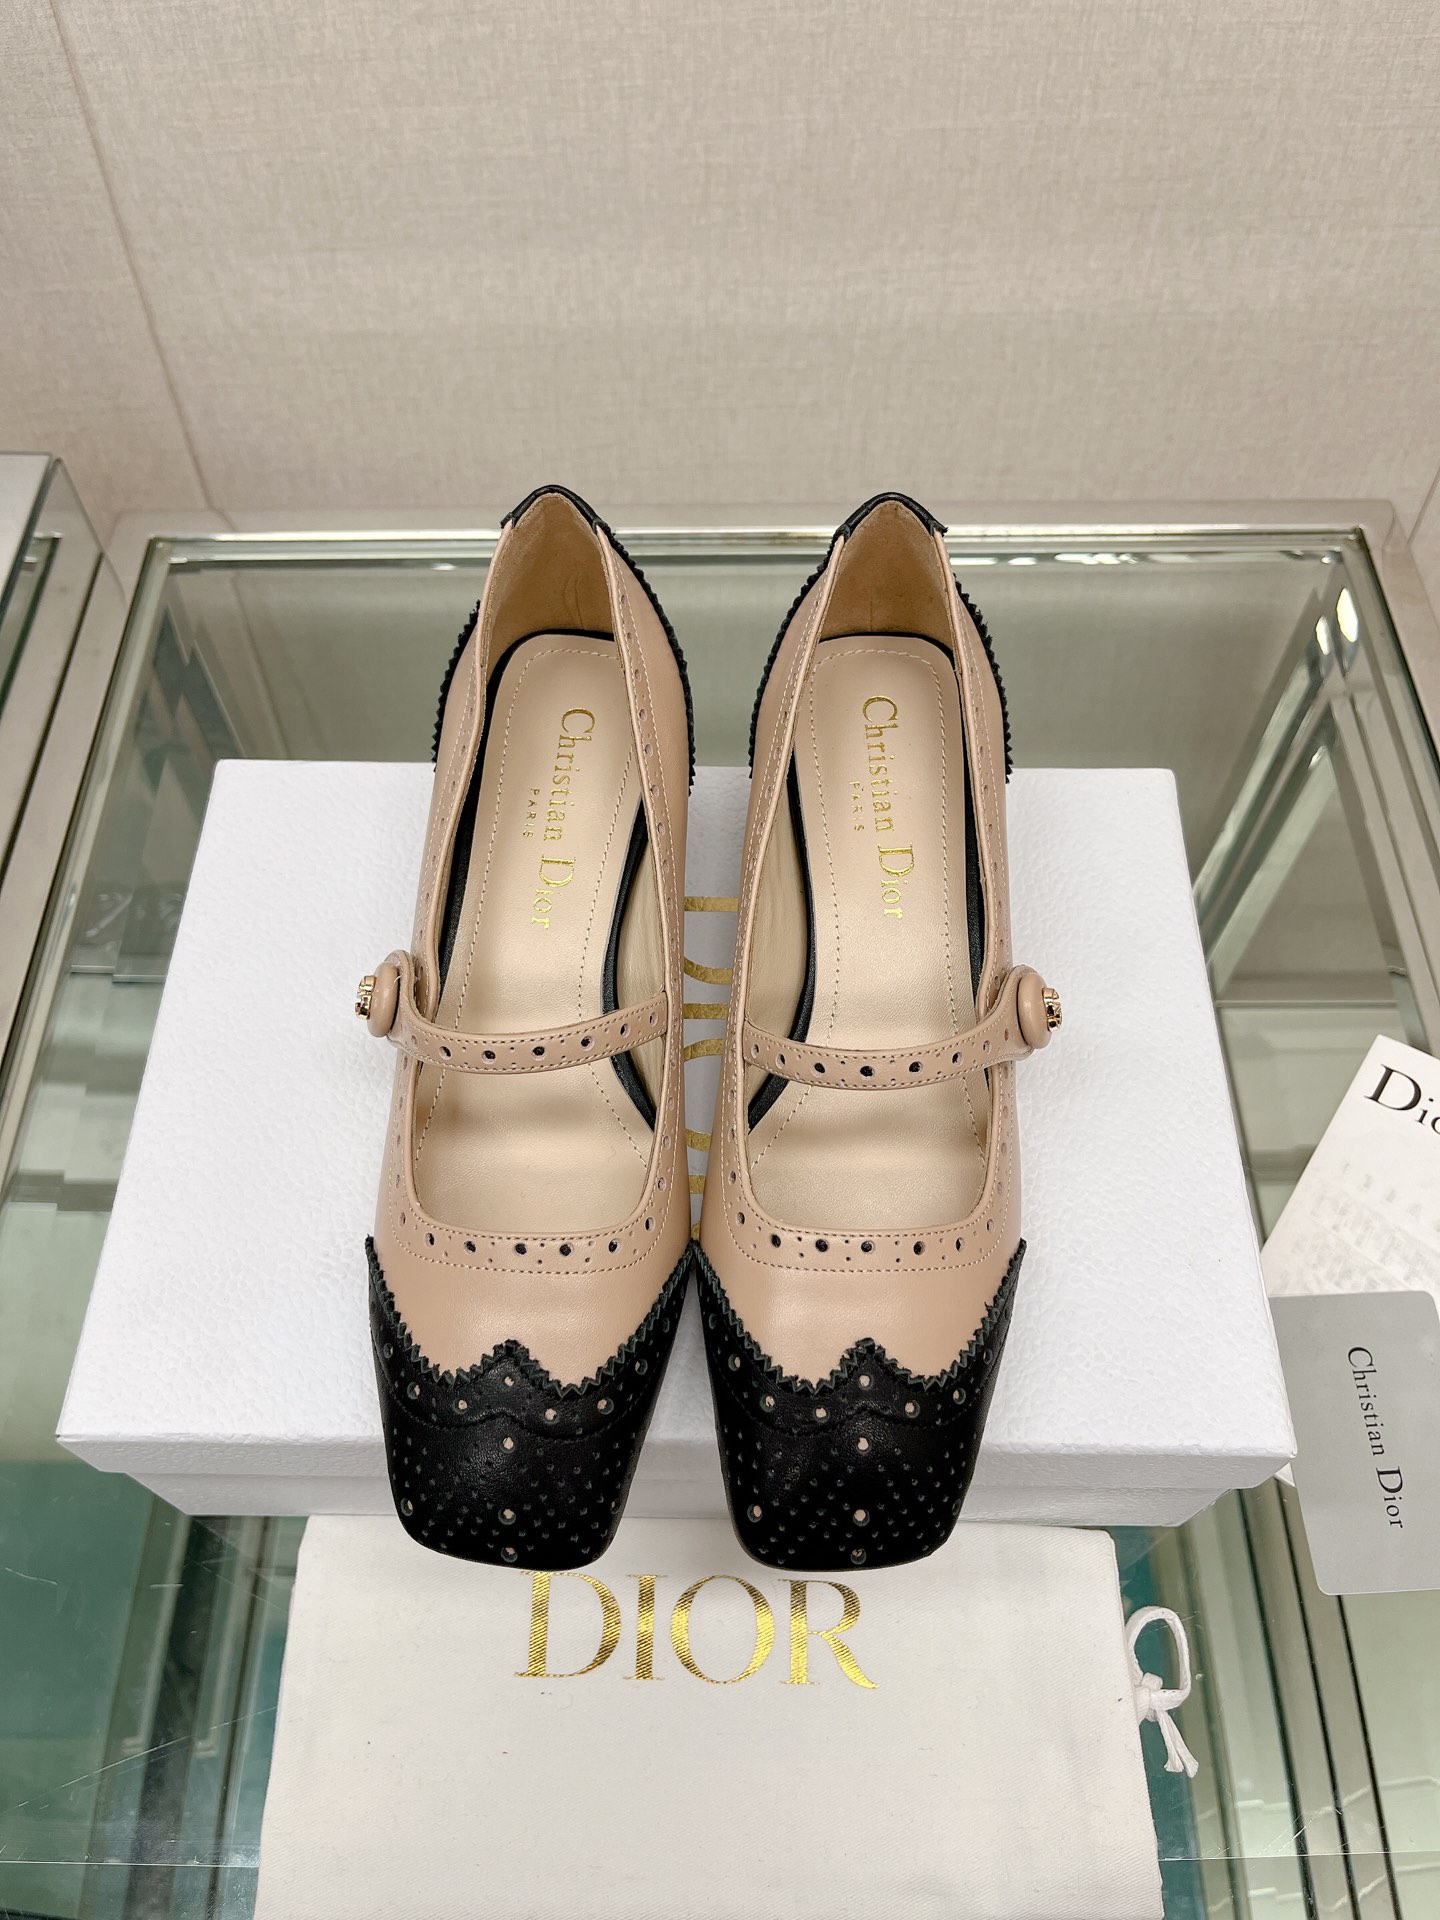 Dior High Heel Pumps Single Layer Shoes Black Gold White Calfskin Cowhide Genuine Leather Sheepskin Fashion